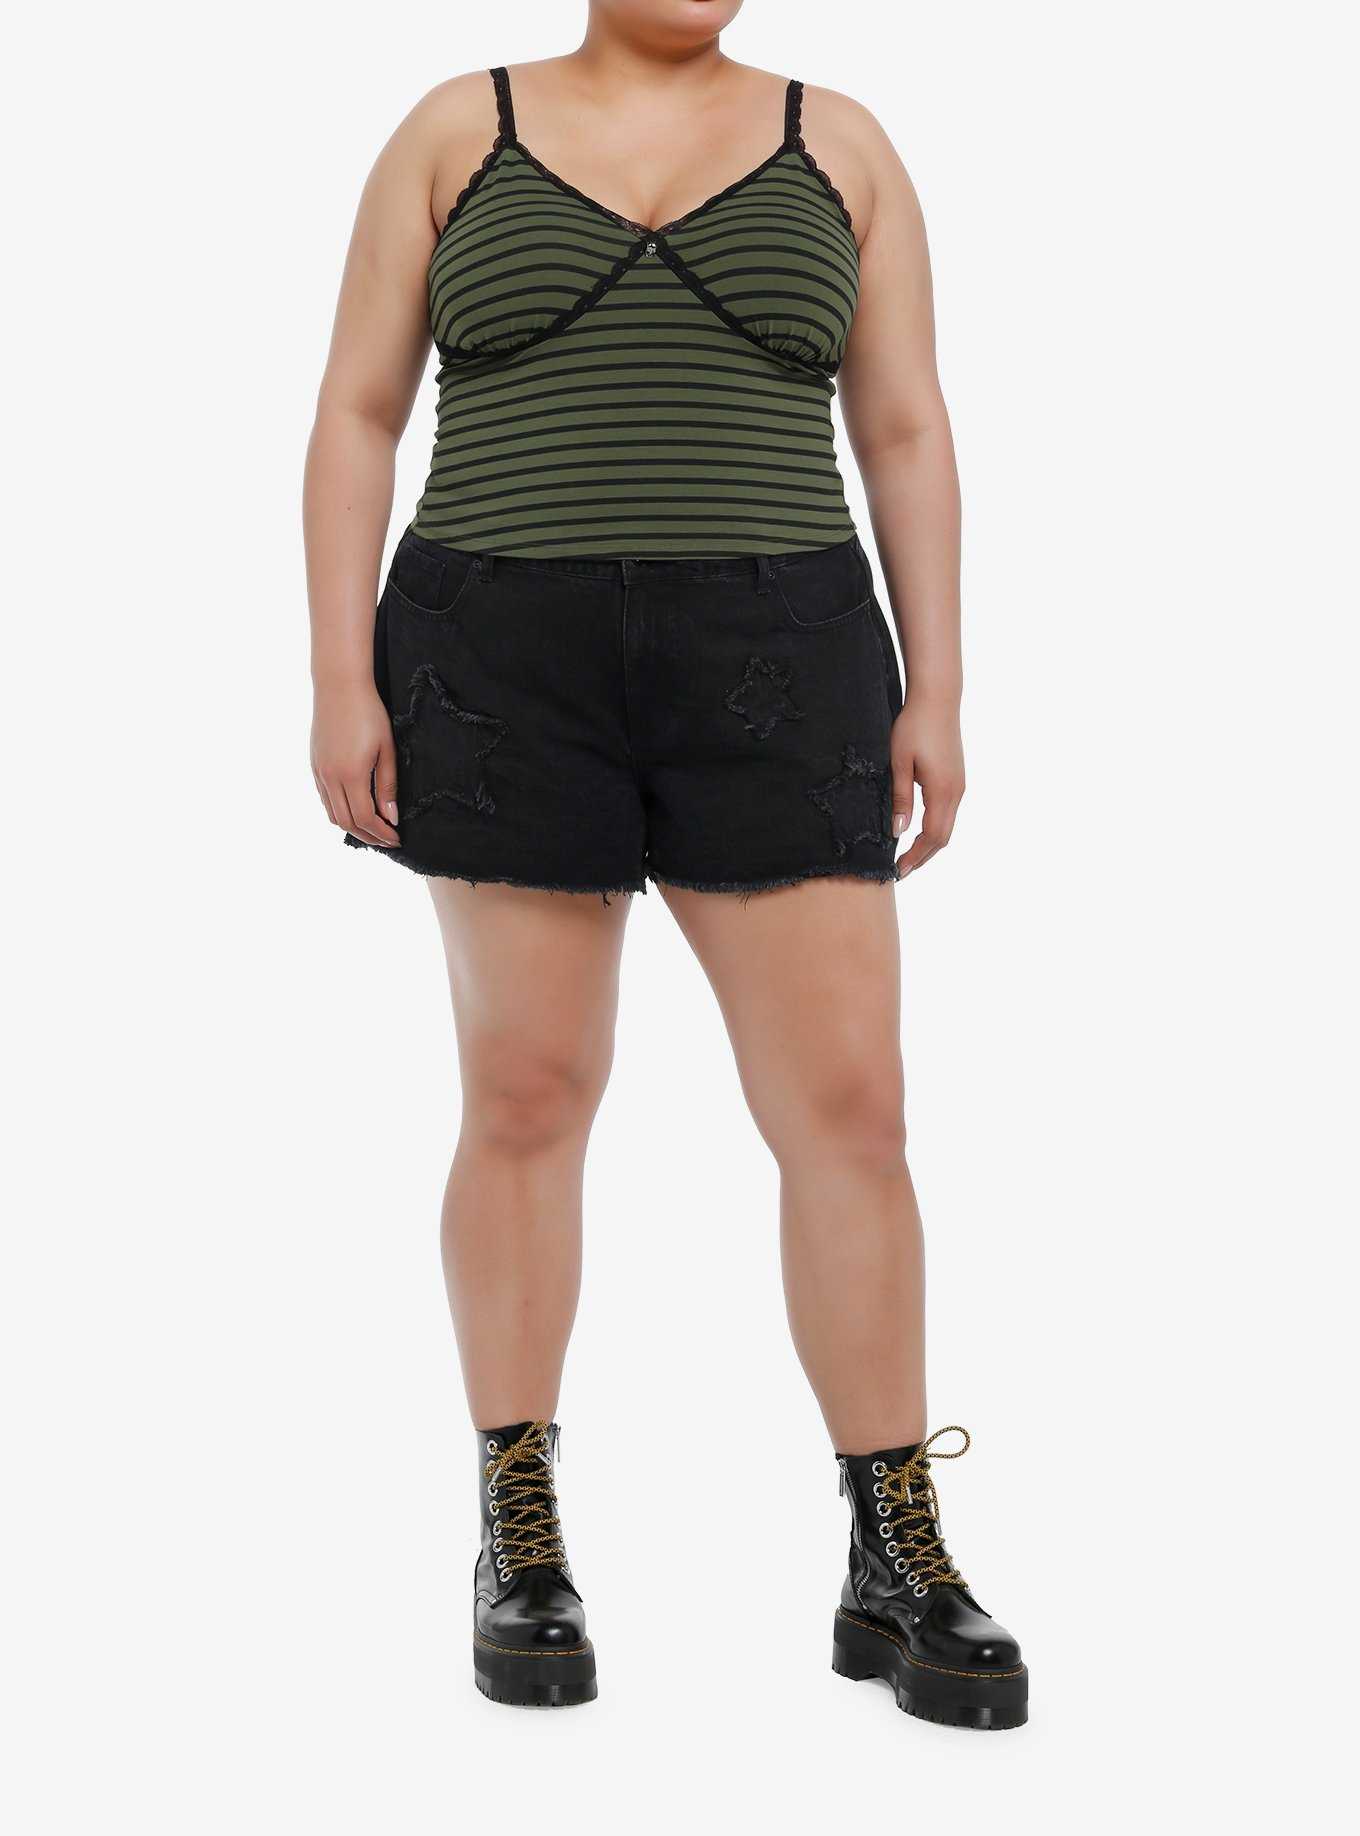 Thorn & Fable Green & Black Stripe Lace Trim Girls Cami Plus Size, , hi-res